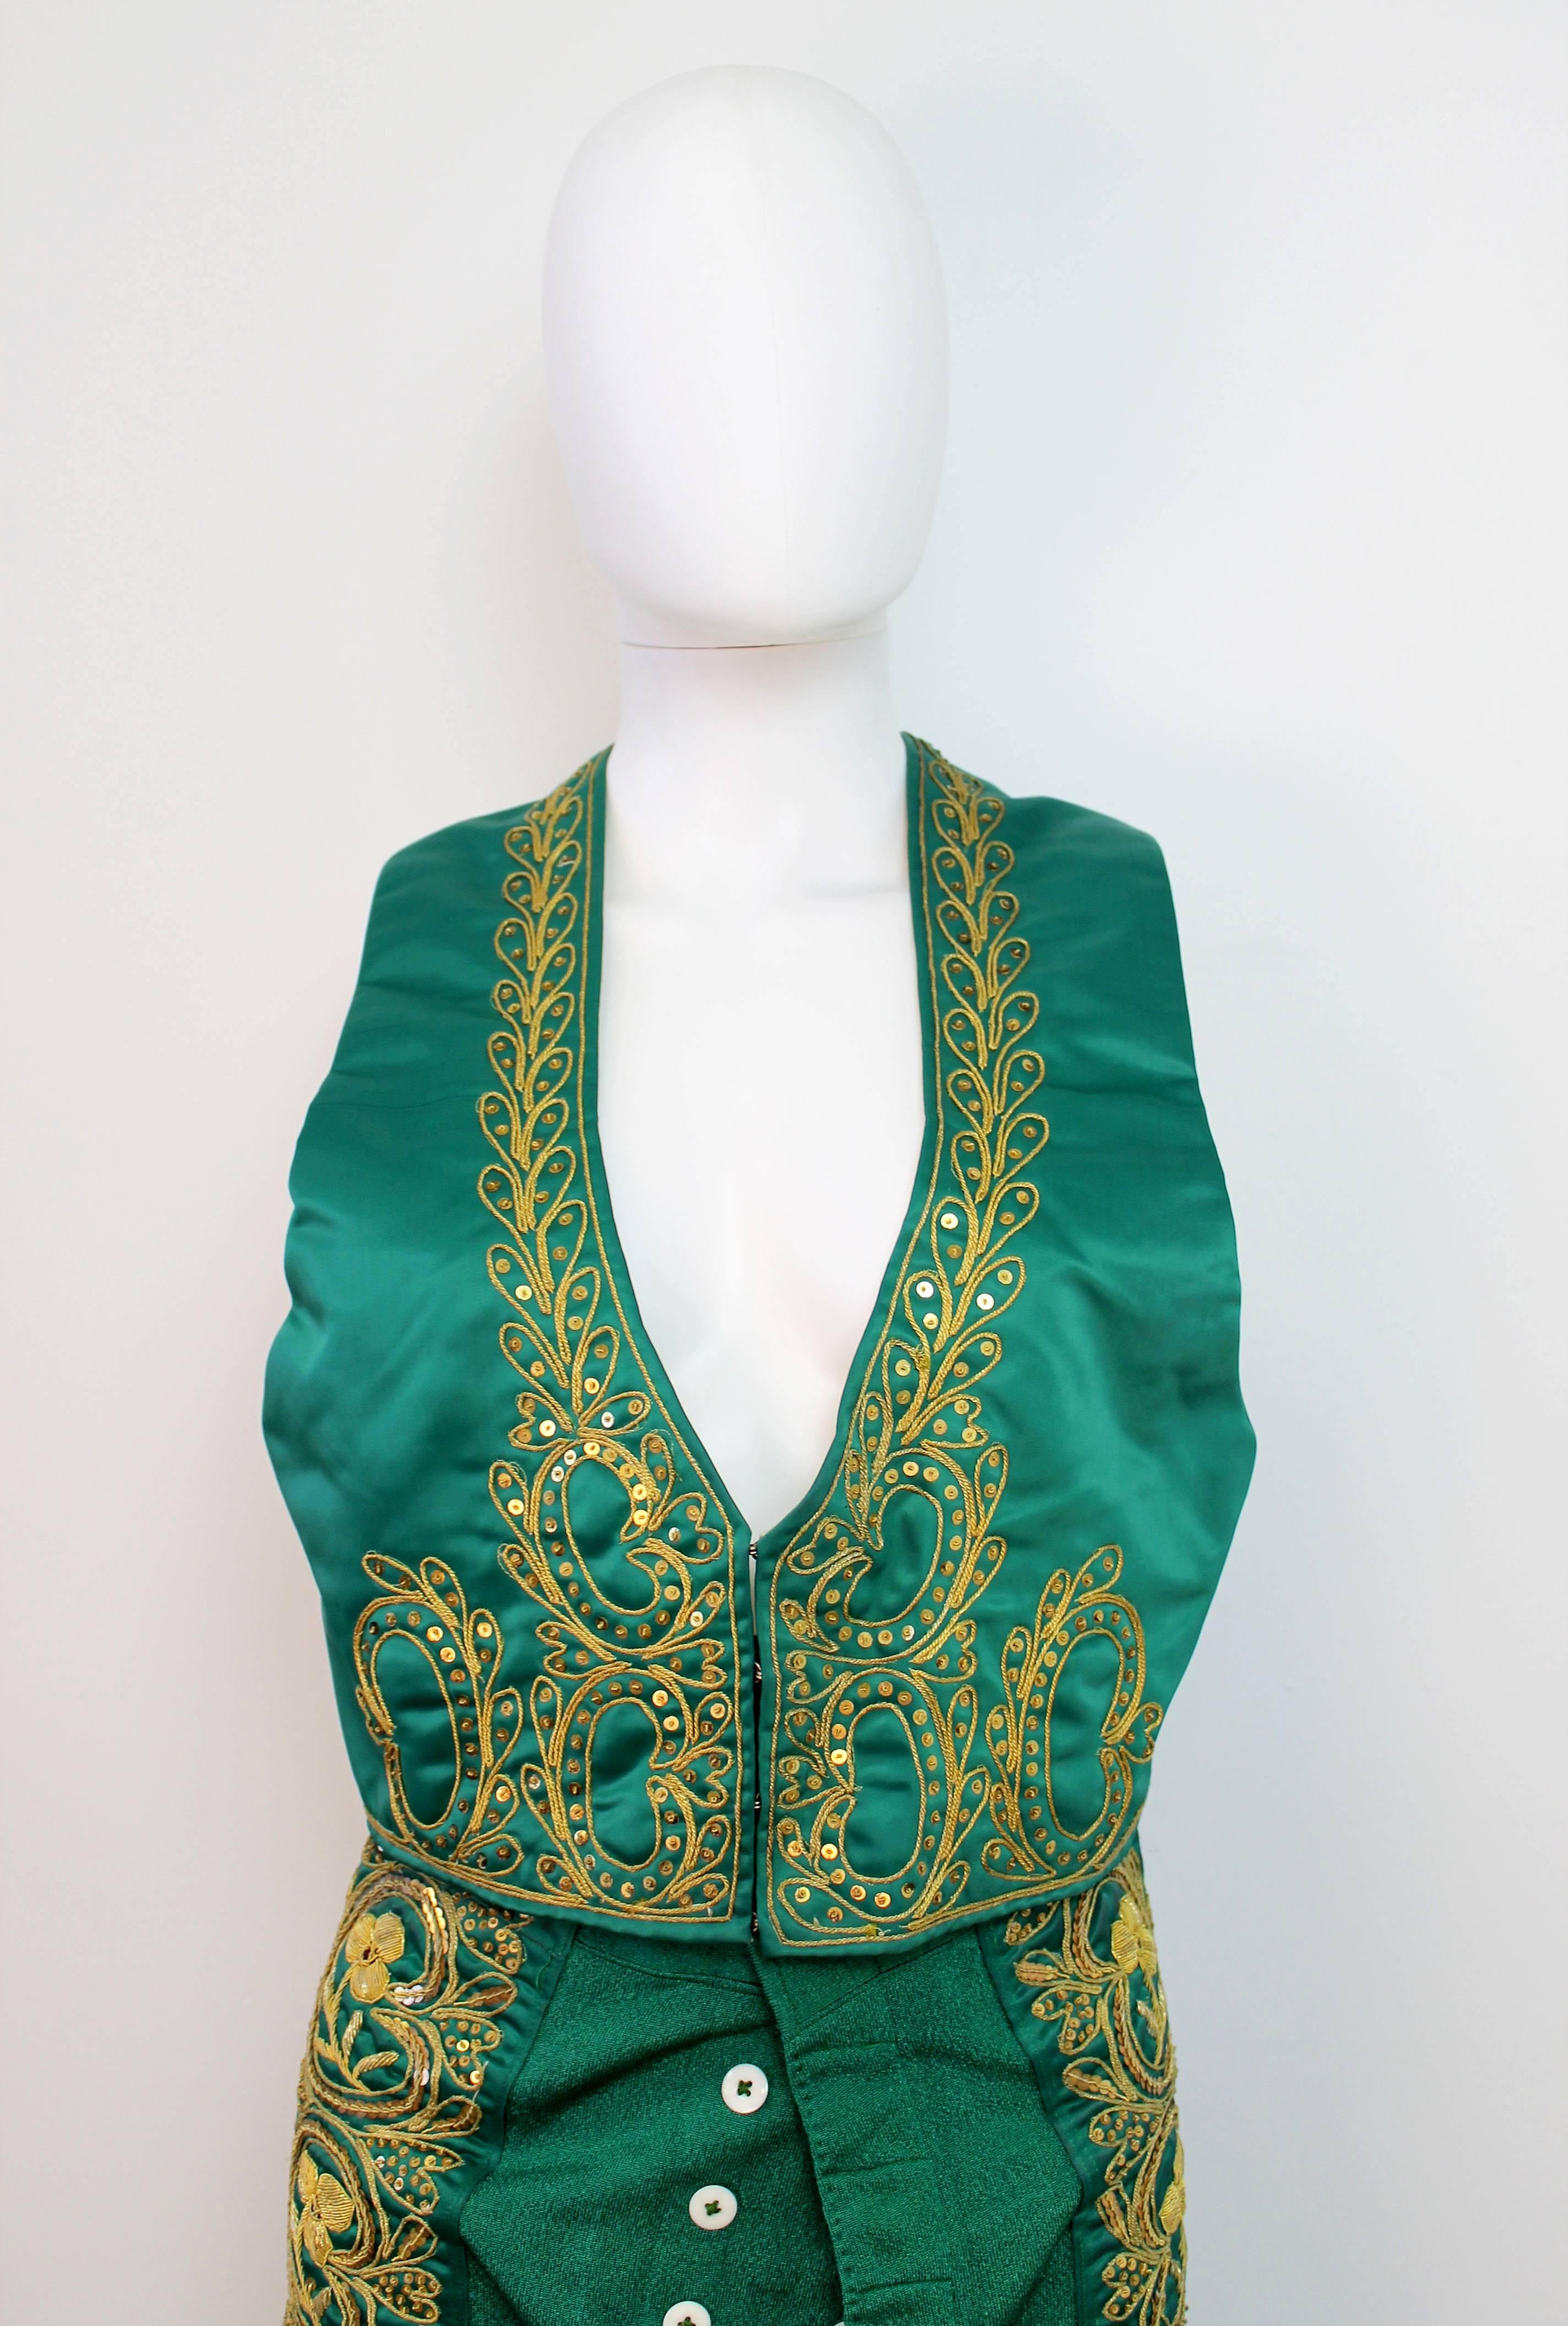 Vintage Maestra Nati Green and Gold Matador Suit 2